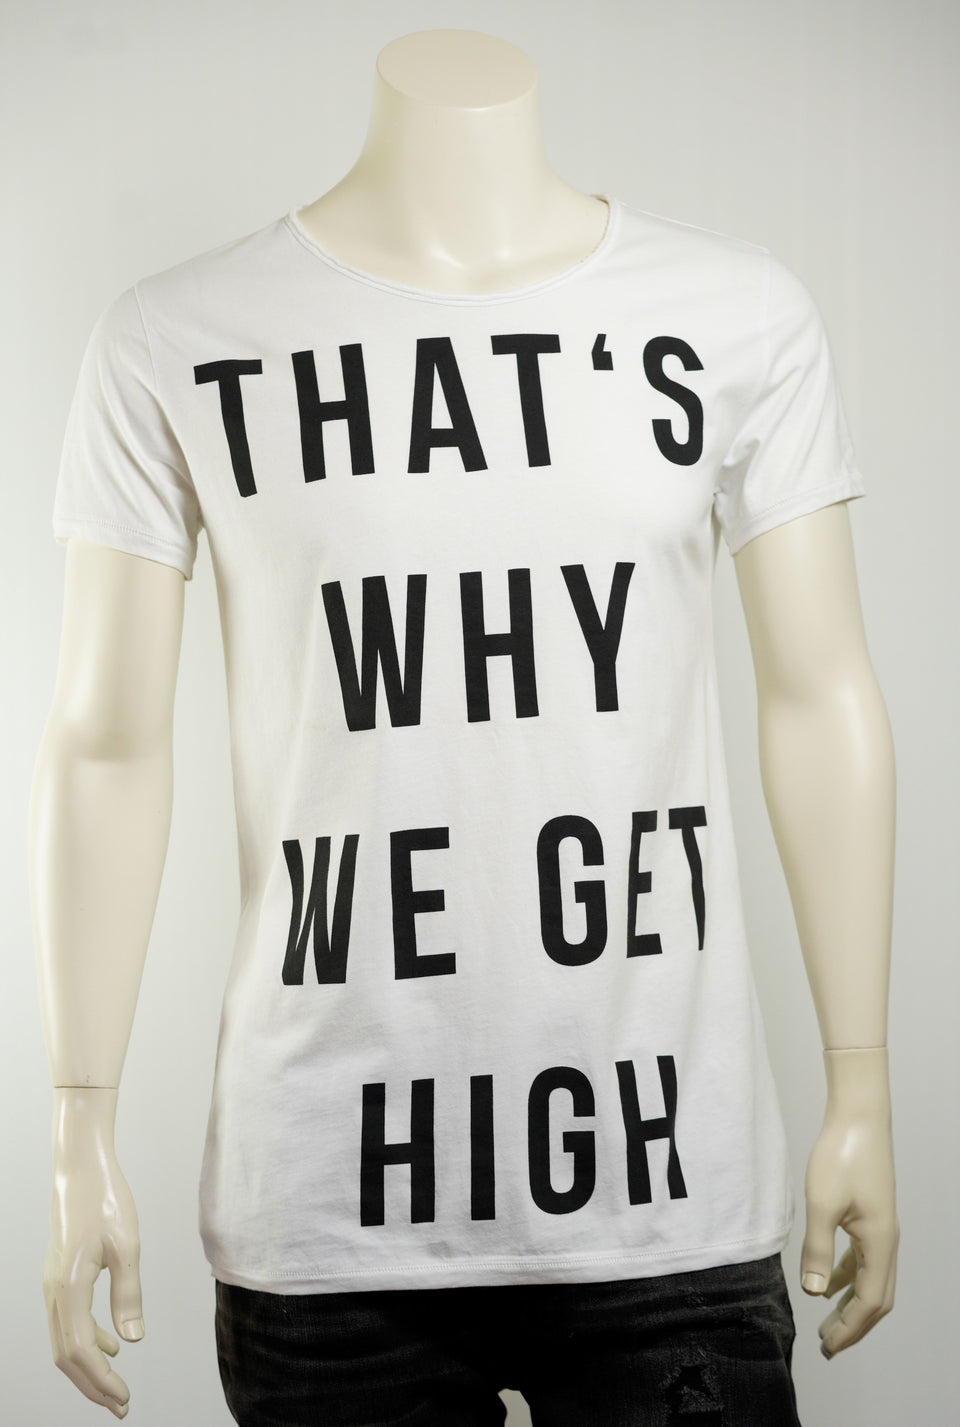 tigha T-shirt Get high